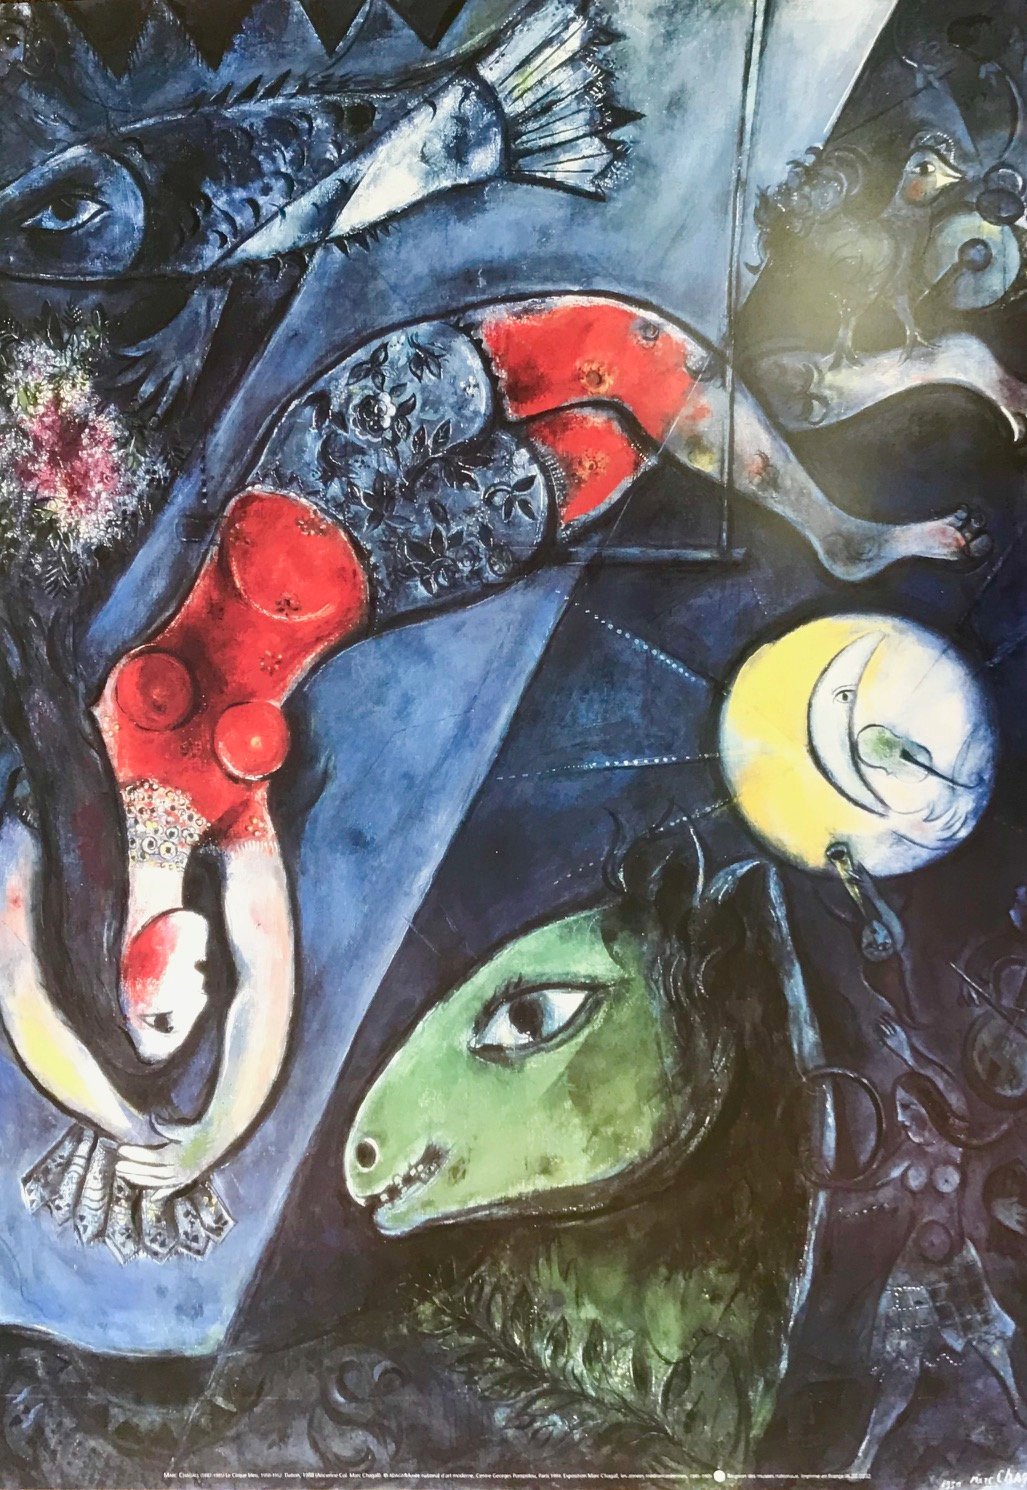 Chagall Poster "Le cirque bleu"